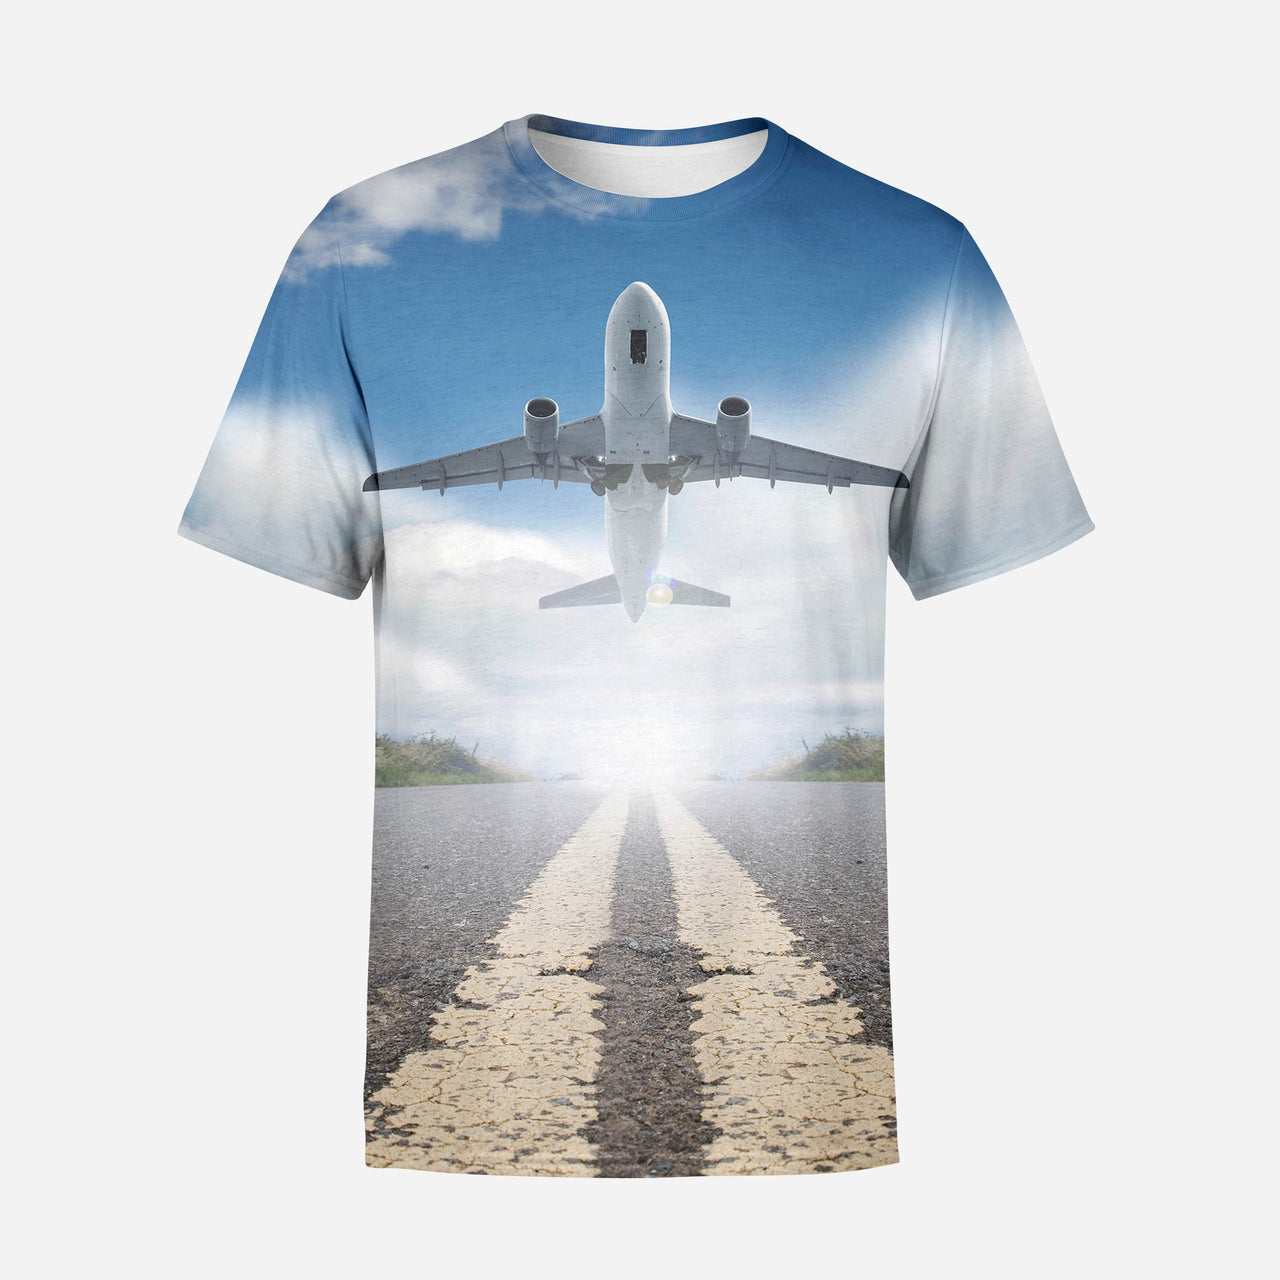 Taking off Aircraft Printed 3D T-Shirts